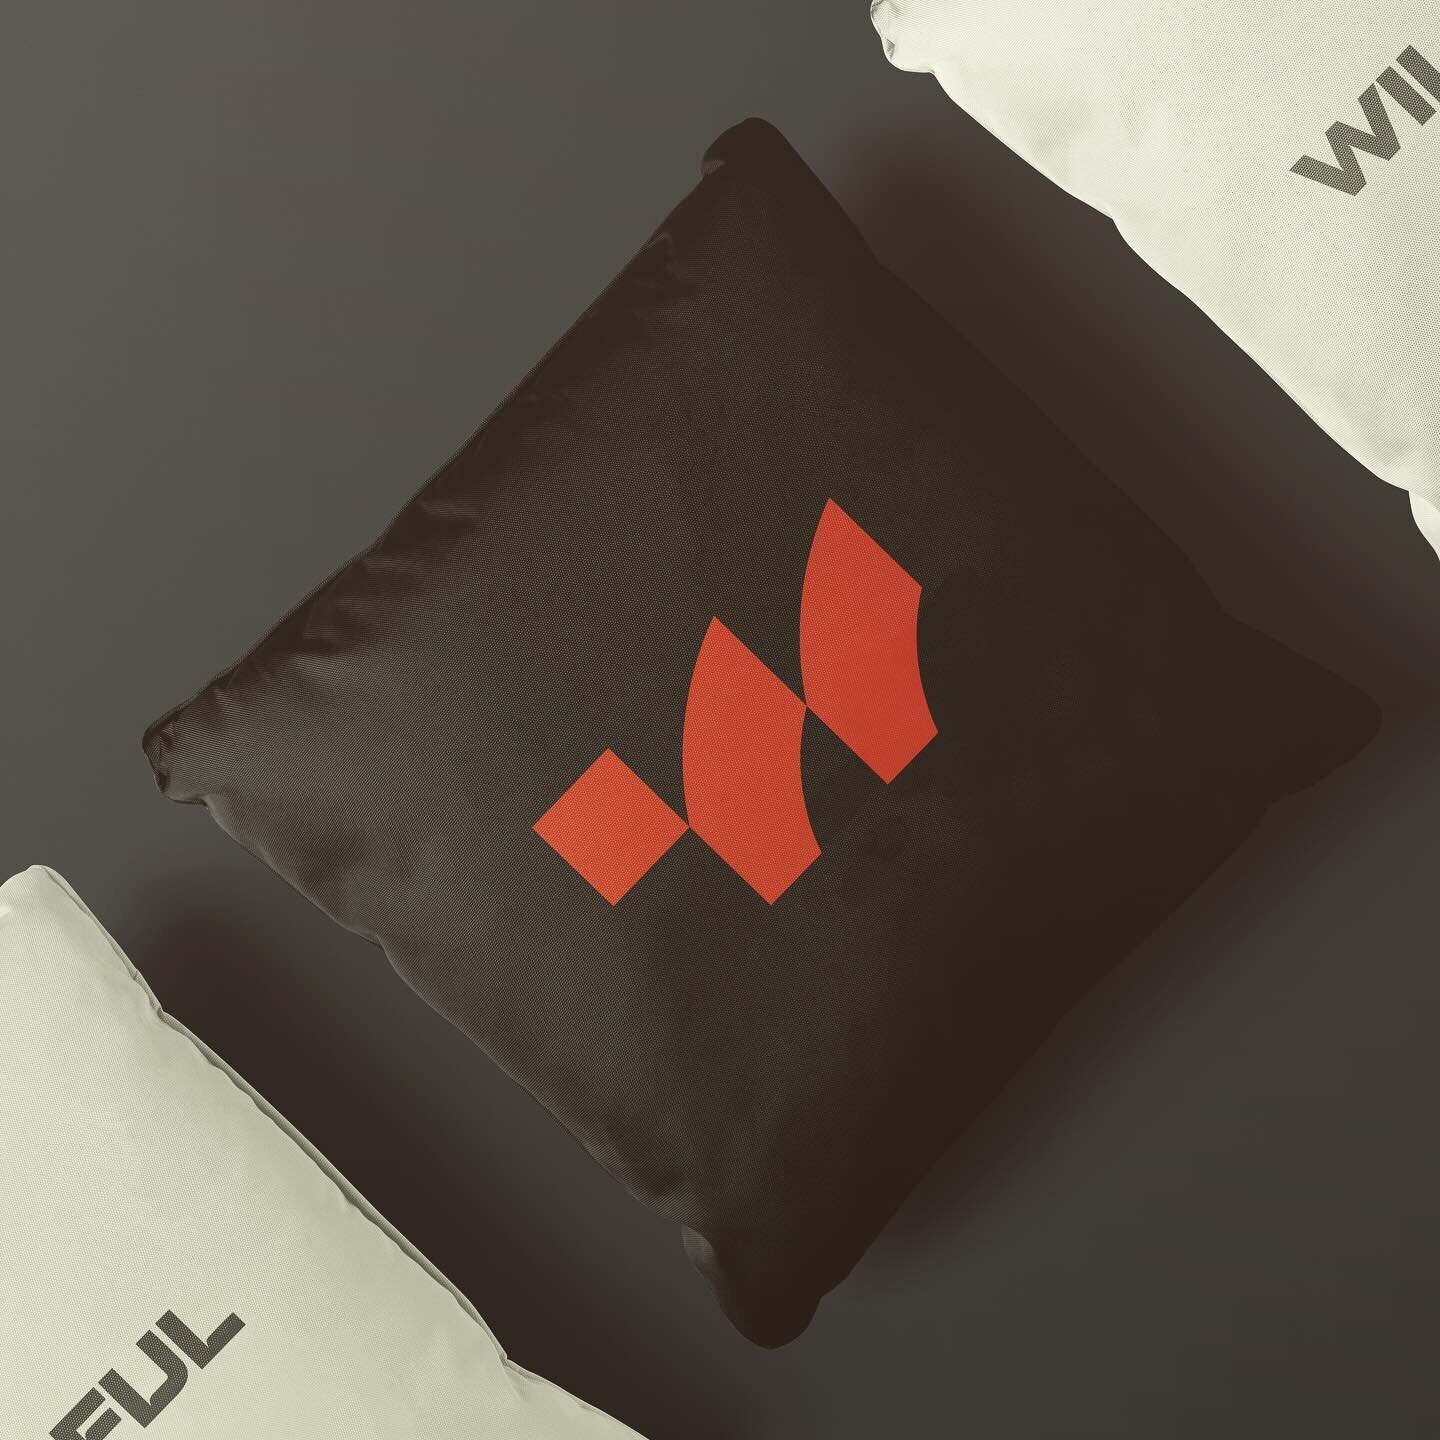 Introducing the new Willful. #rebranding #rebrand #brandidentity #branding #madebywillful